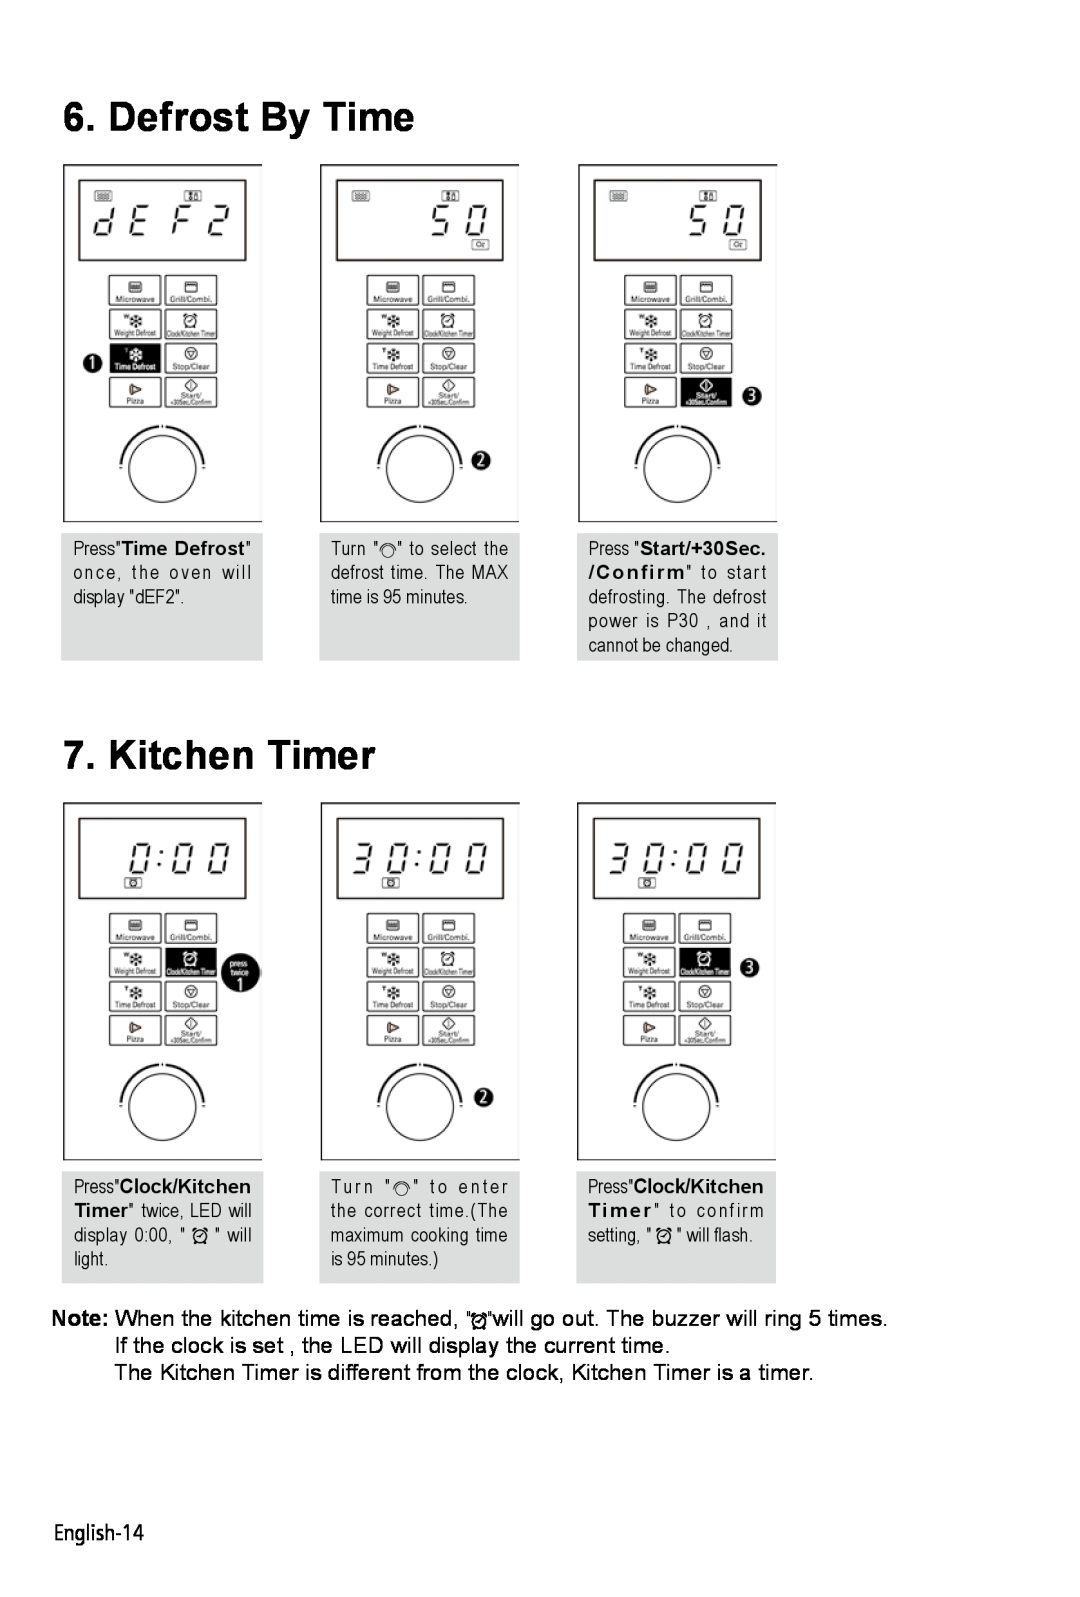 West Bend NJ 07054 instruction manual Defrost By Time, Kitchen Timer 